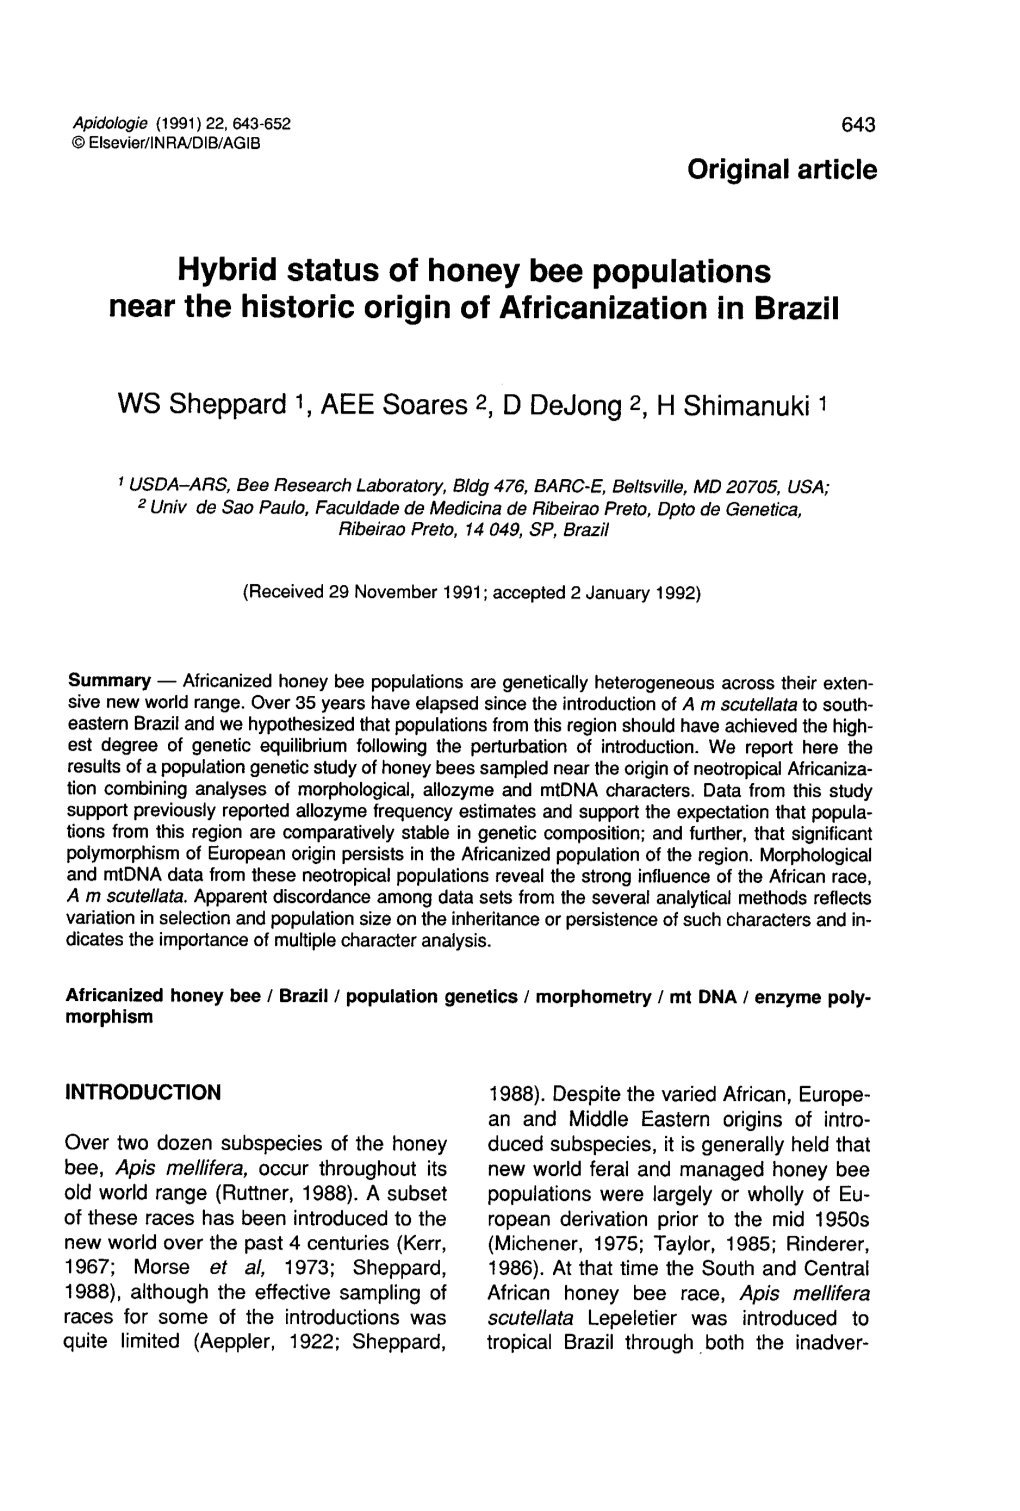 Hybrid Status of Honey Bee Populations Near the Historic Origin of Africanization in Brazil